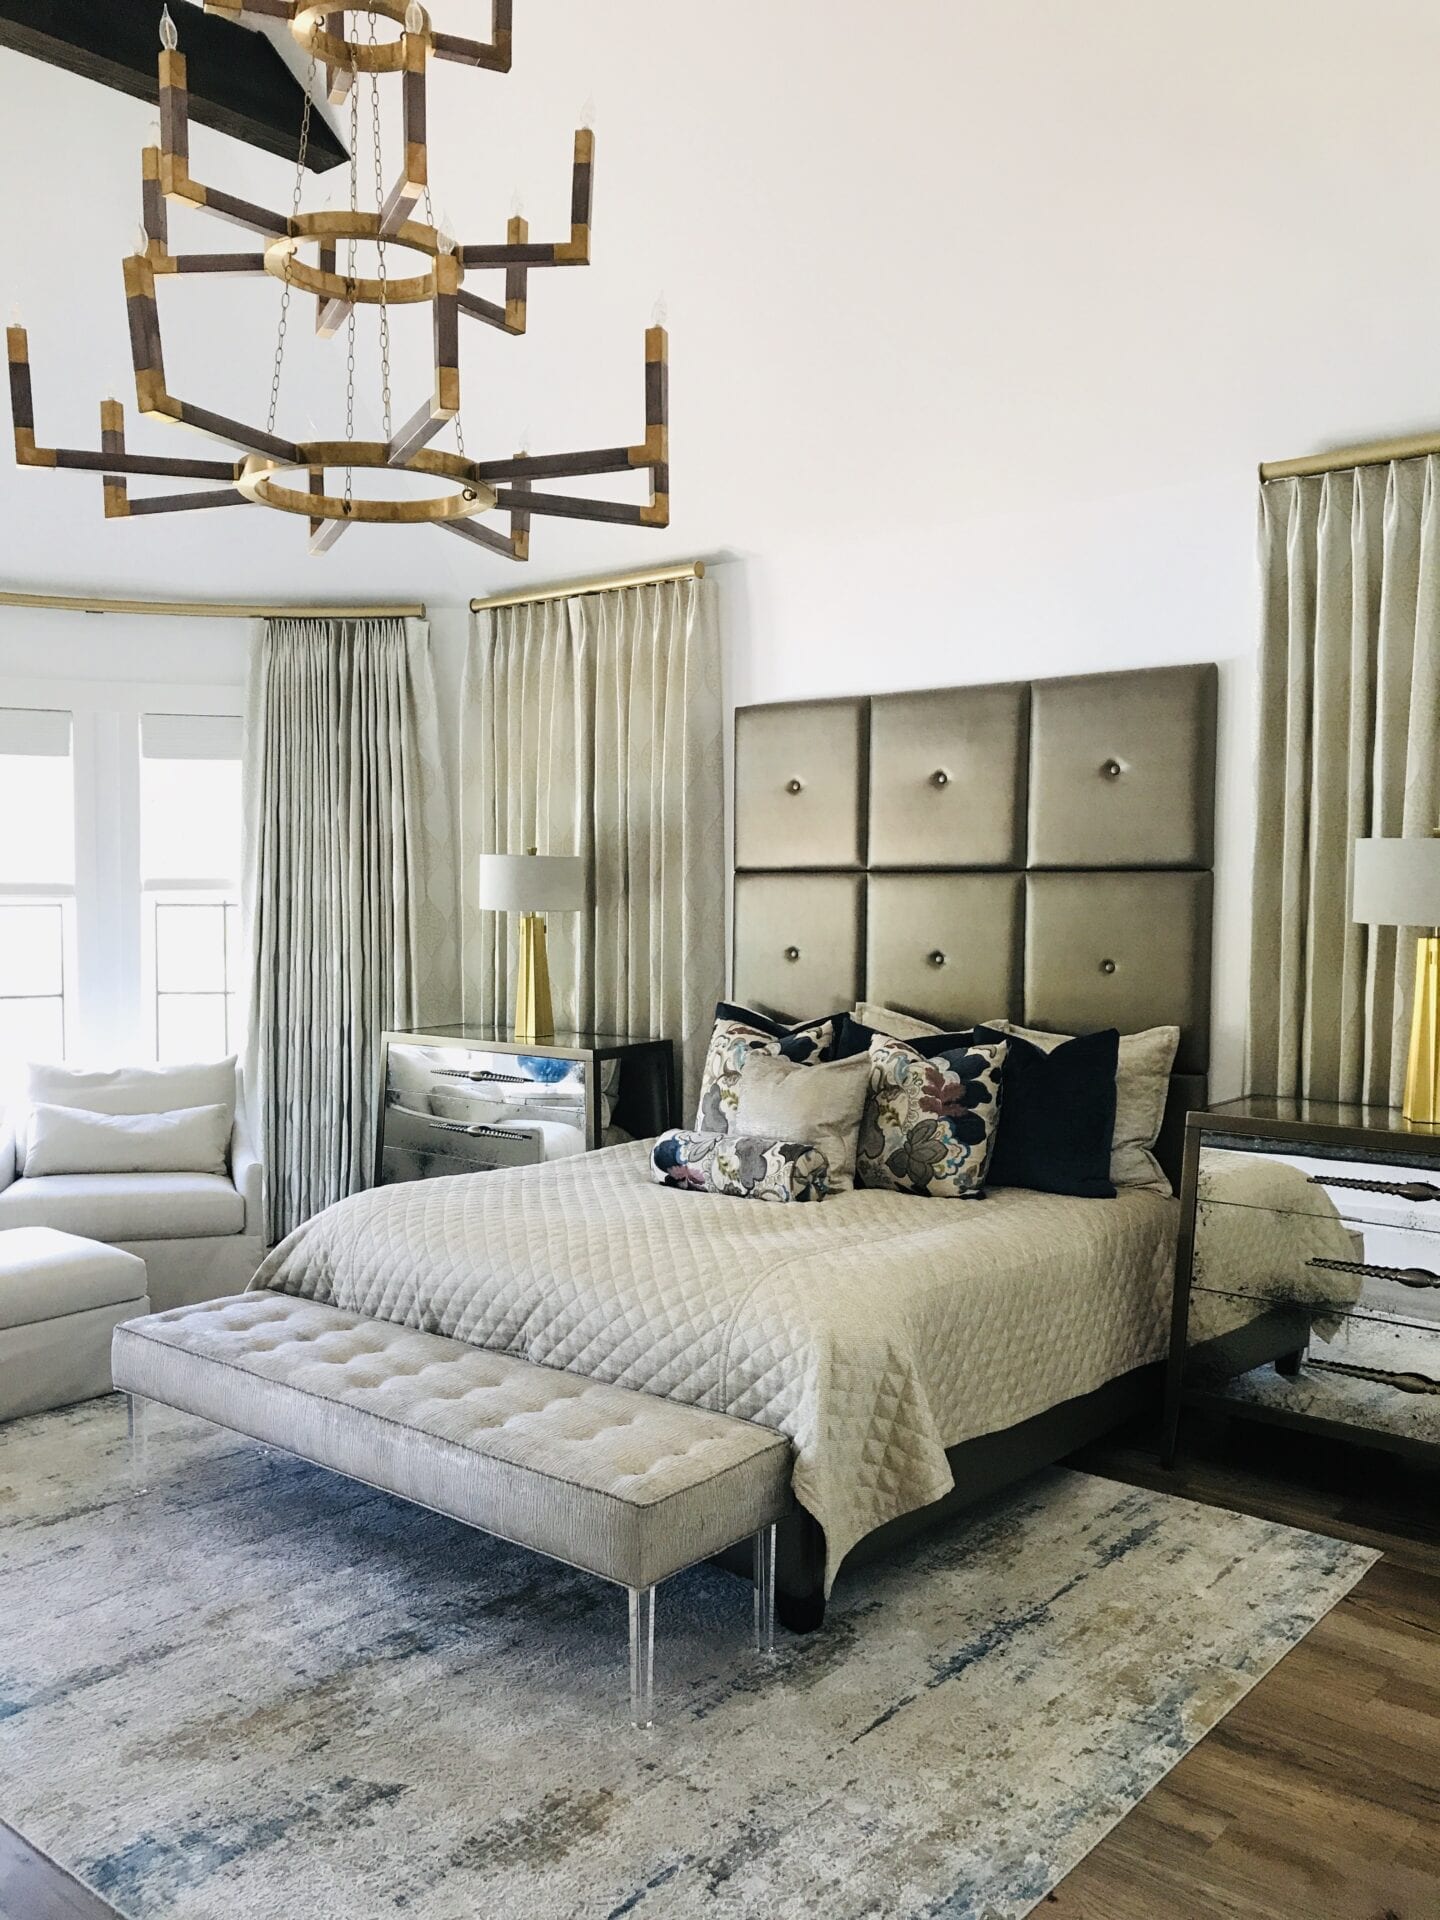 Huxtable - Wall mounted upholstered, luxury headboard with custom upholstered wall panels - Custom luxury, upholstered beds with high end, bedroom textiles | Blend Home Furnishings